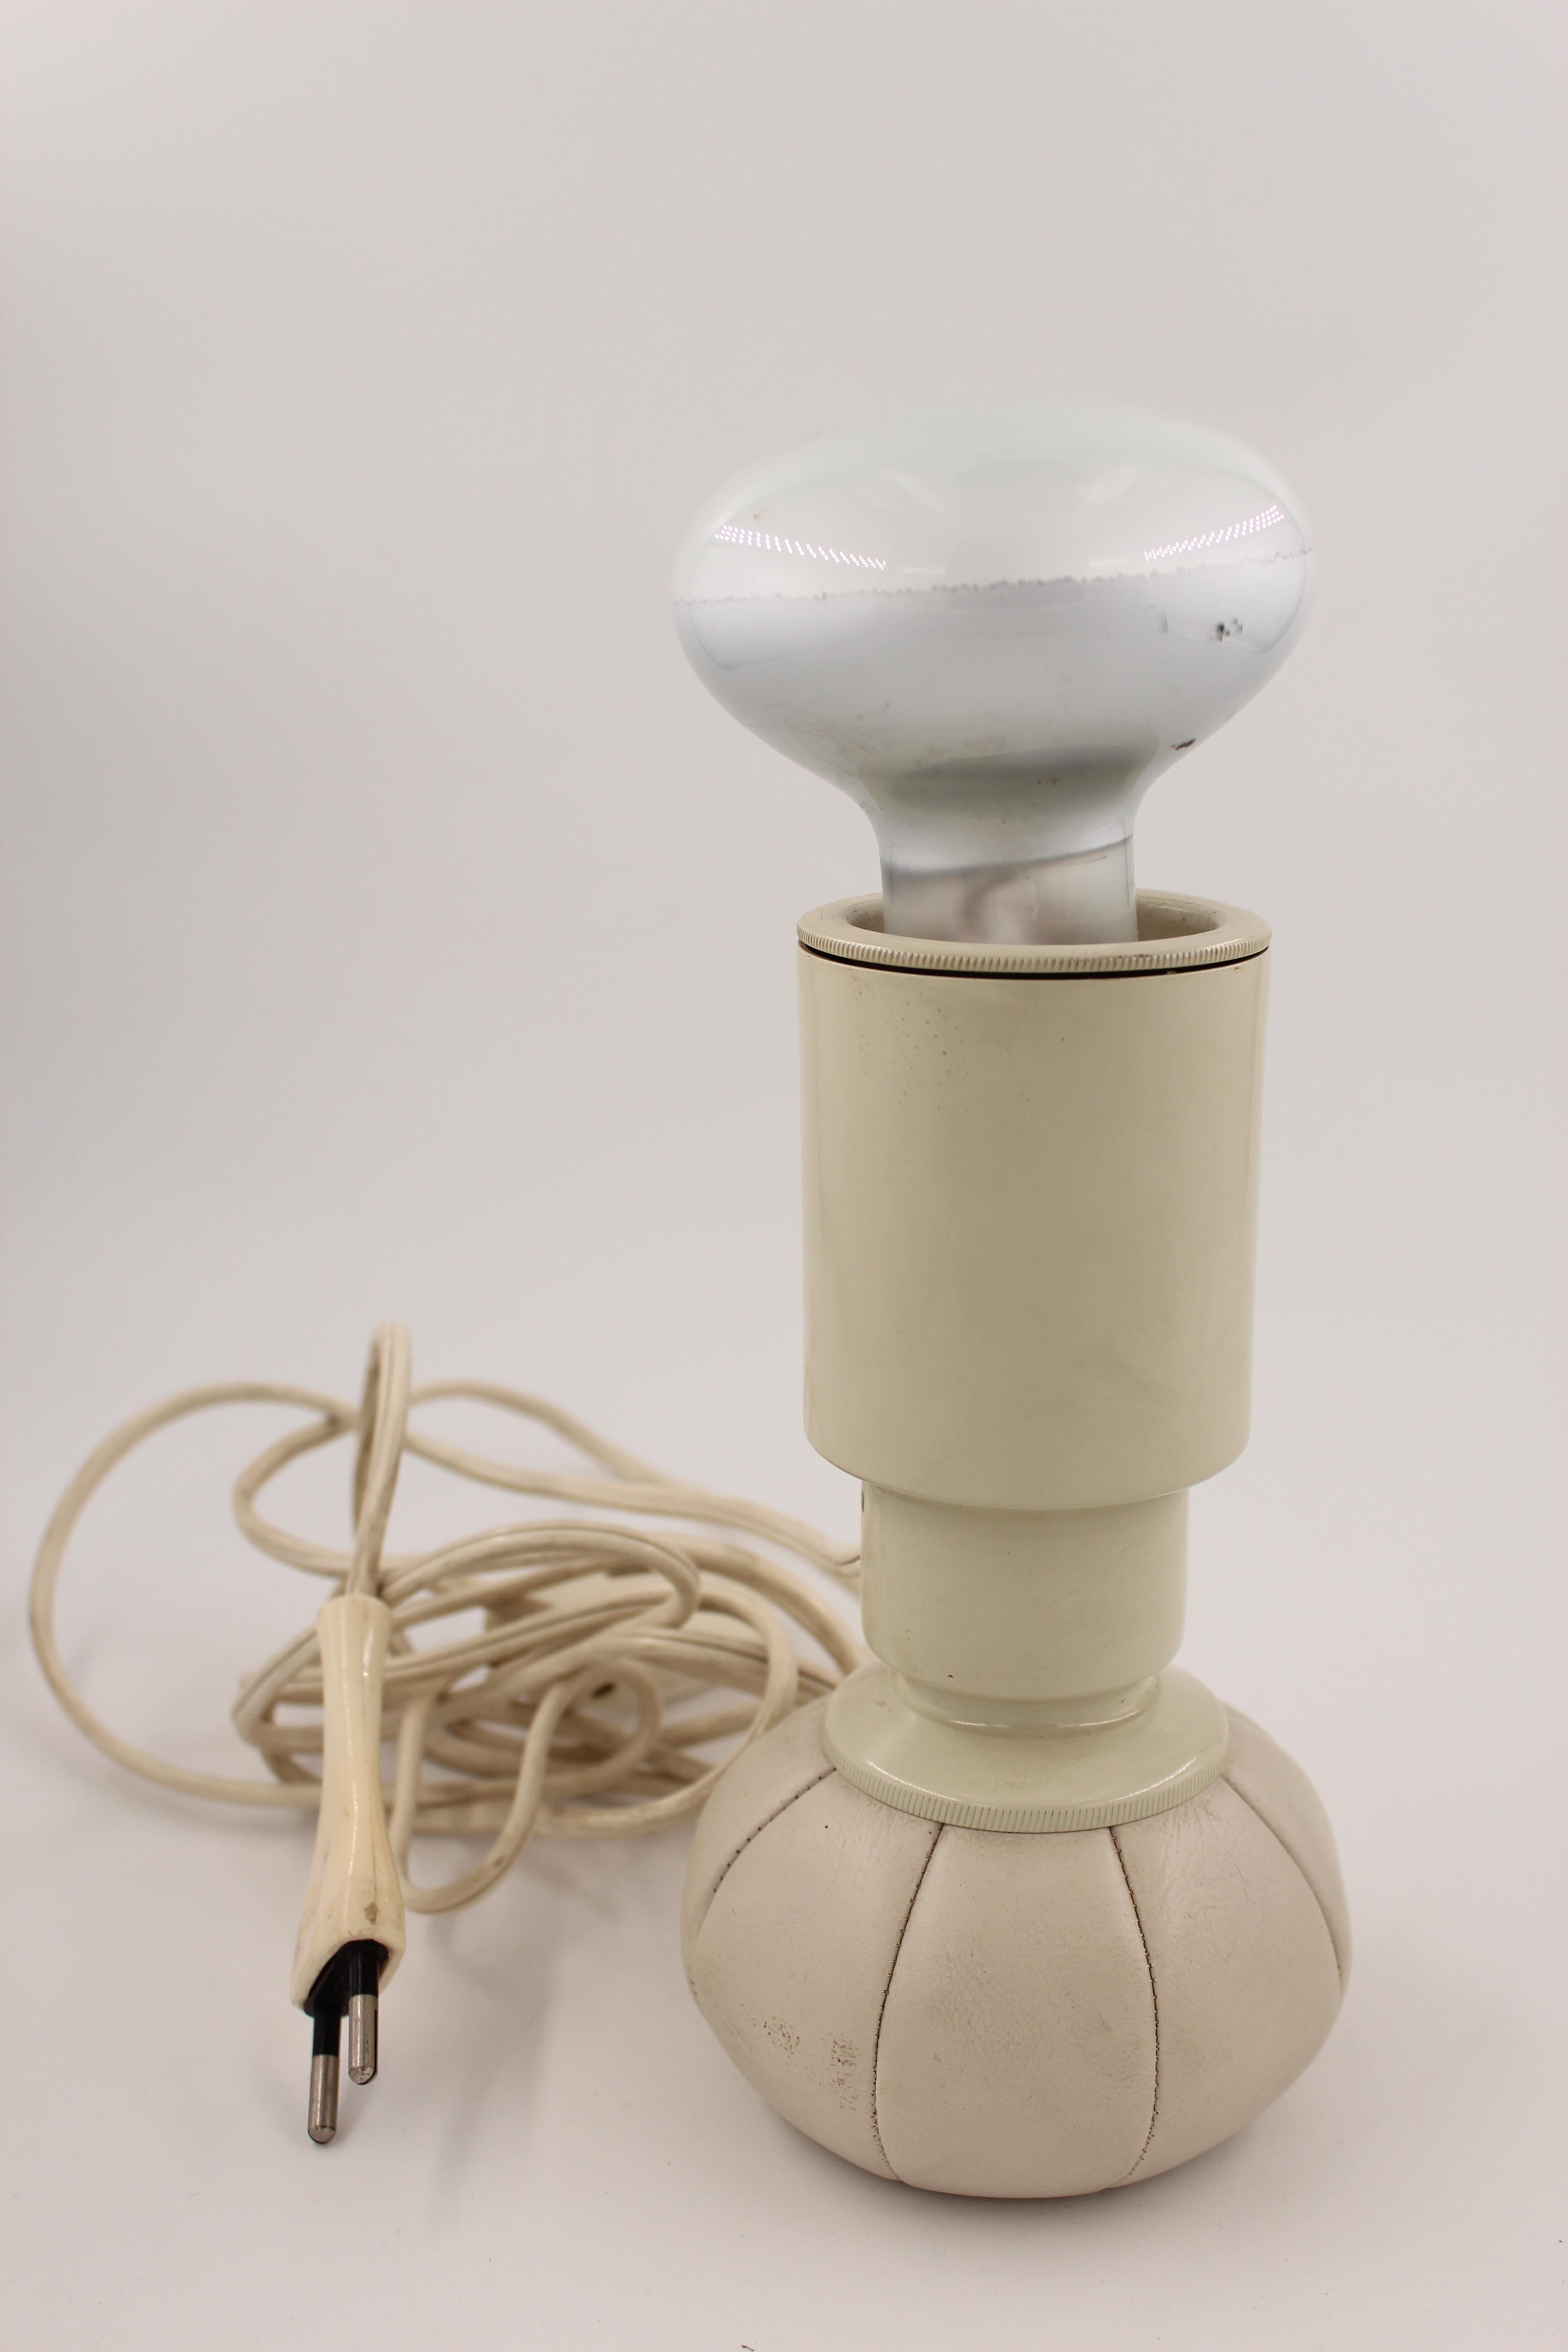 Gino Sarfatti off White 600 Table Lamp for Arteluce, Italy, 1960 1